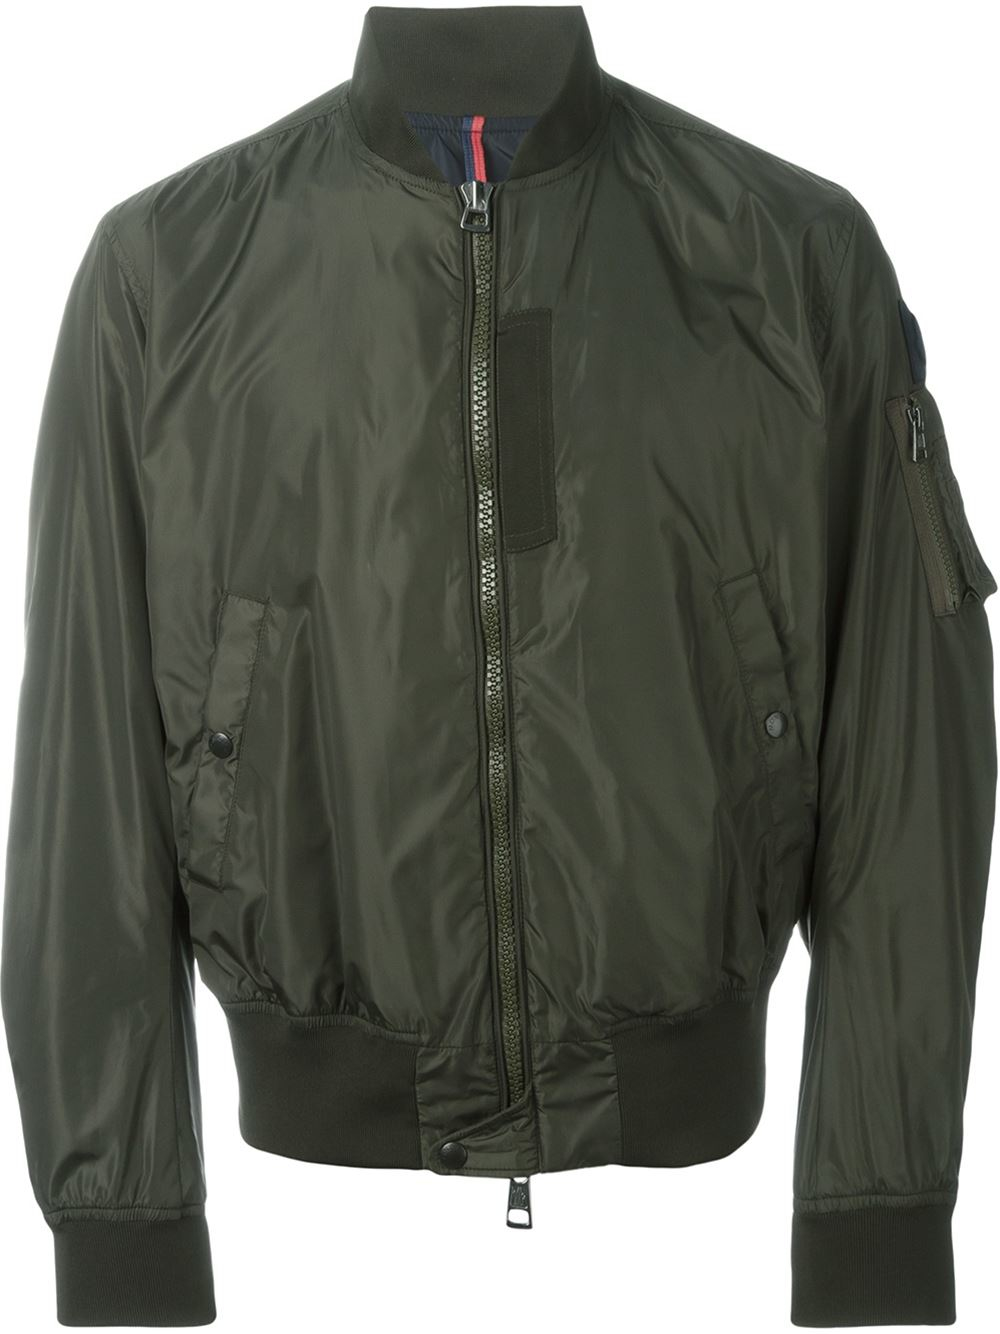 Lyst - Moncler 'timothe' Bomber Jacket in Green for Men